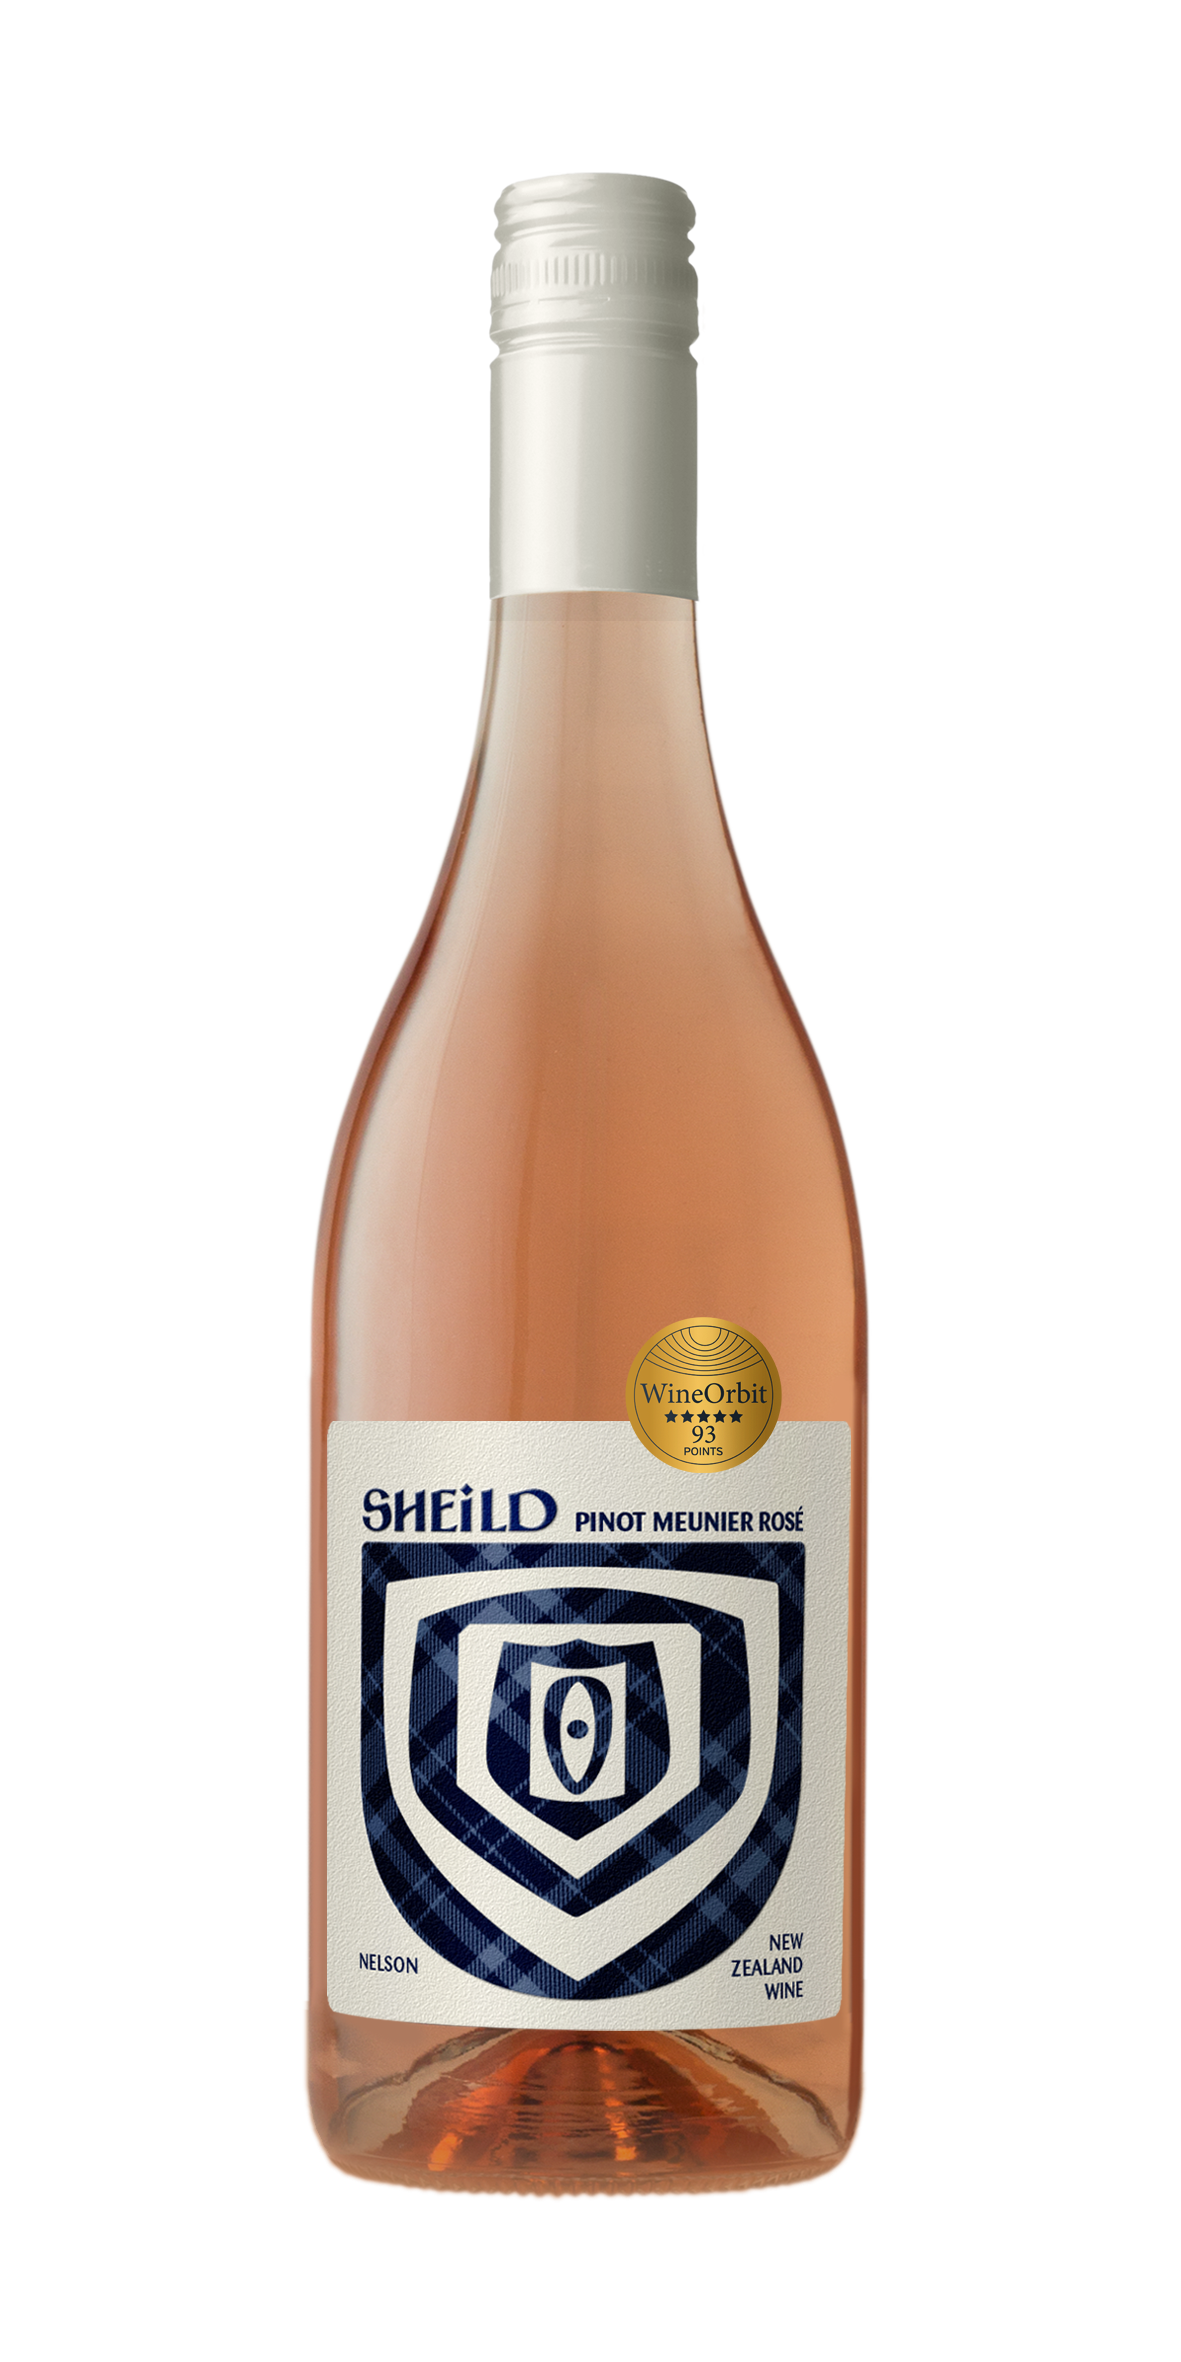 Bottle of SHEiLD's Pinot Meunier Rosé wine, with cream-coloured label and dark blue cap/logo. Wine Orbit award badge, 93/100 points.